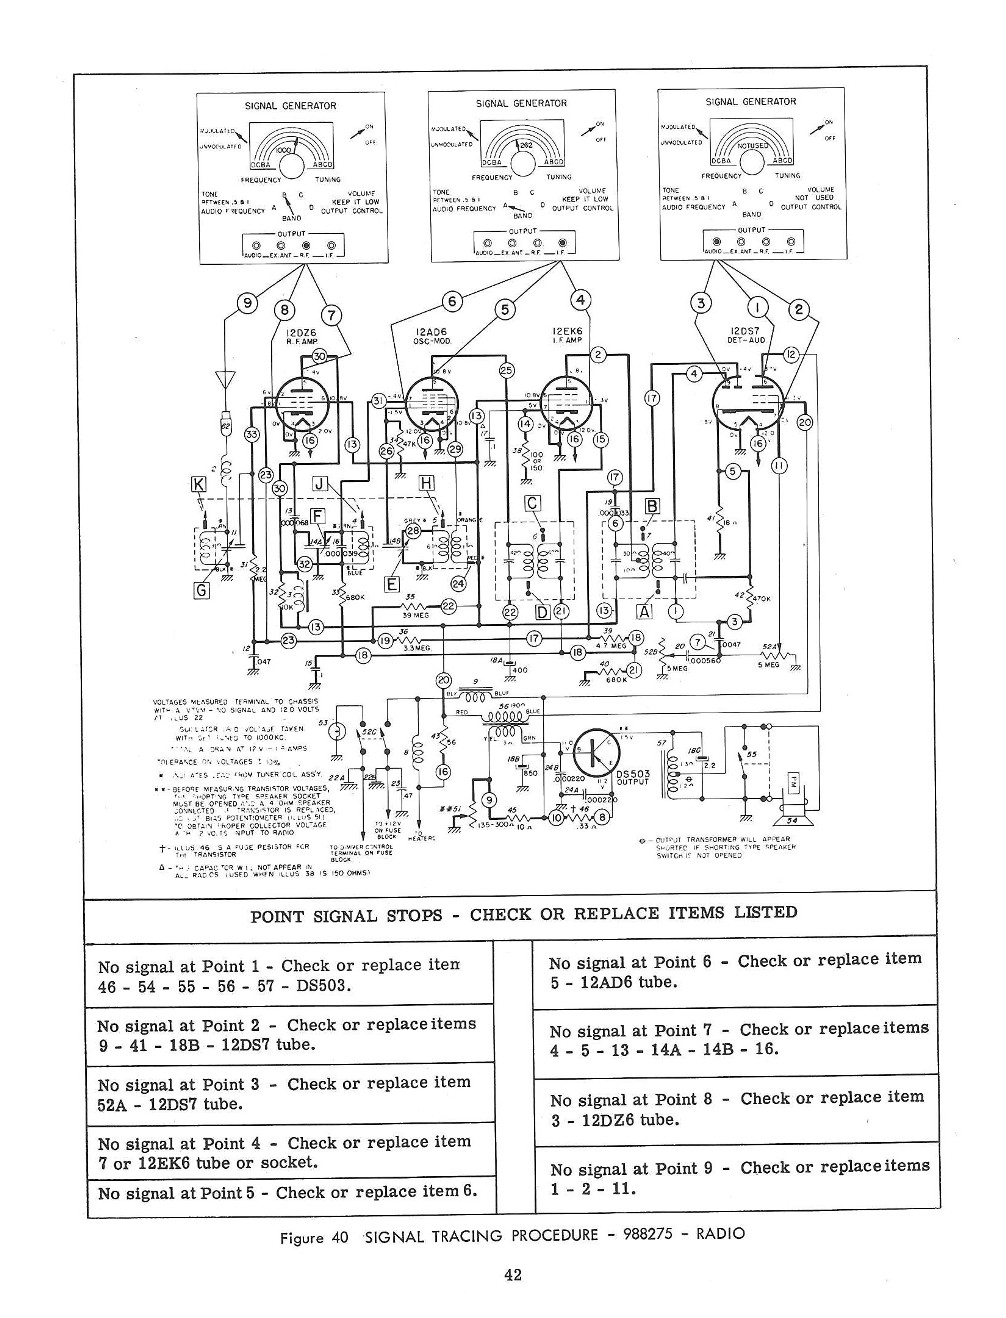 1960 Chevrolet Radio Service and Shop Manual